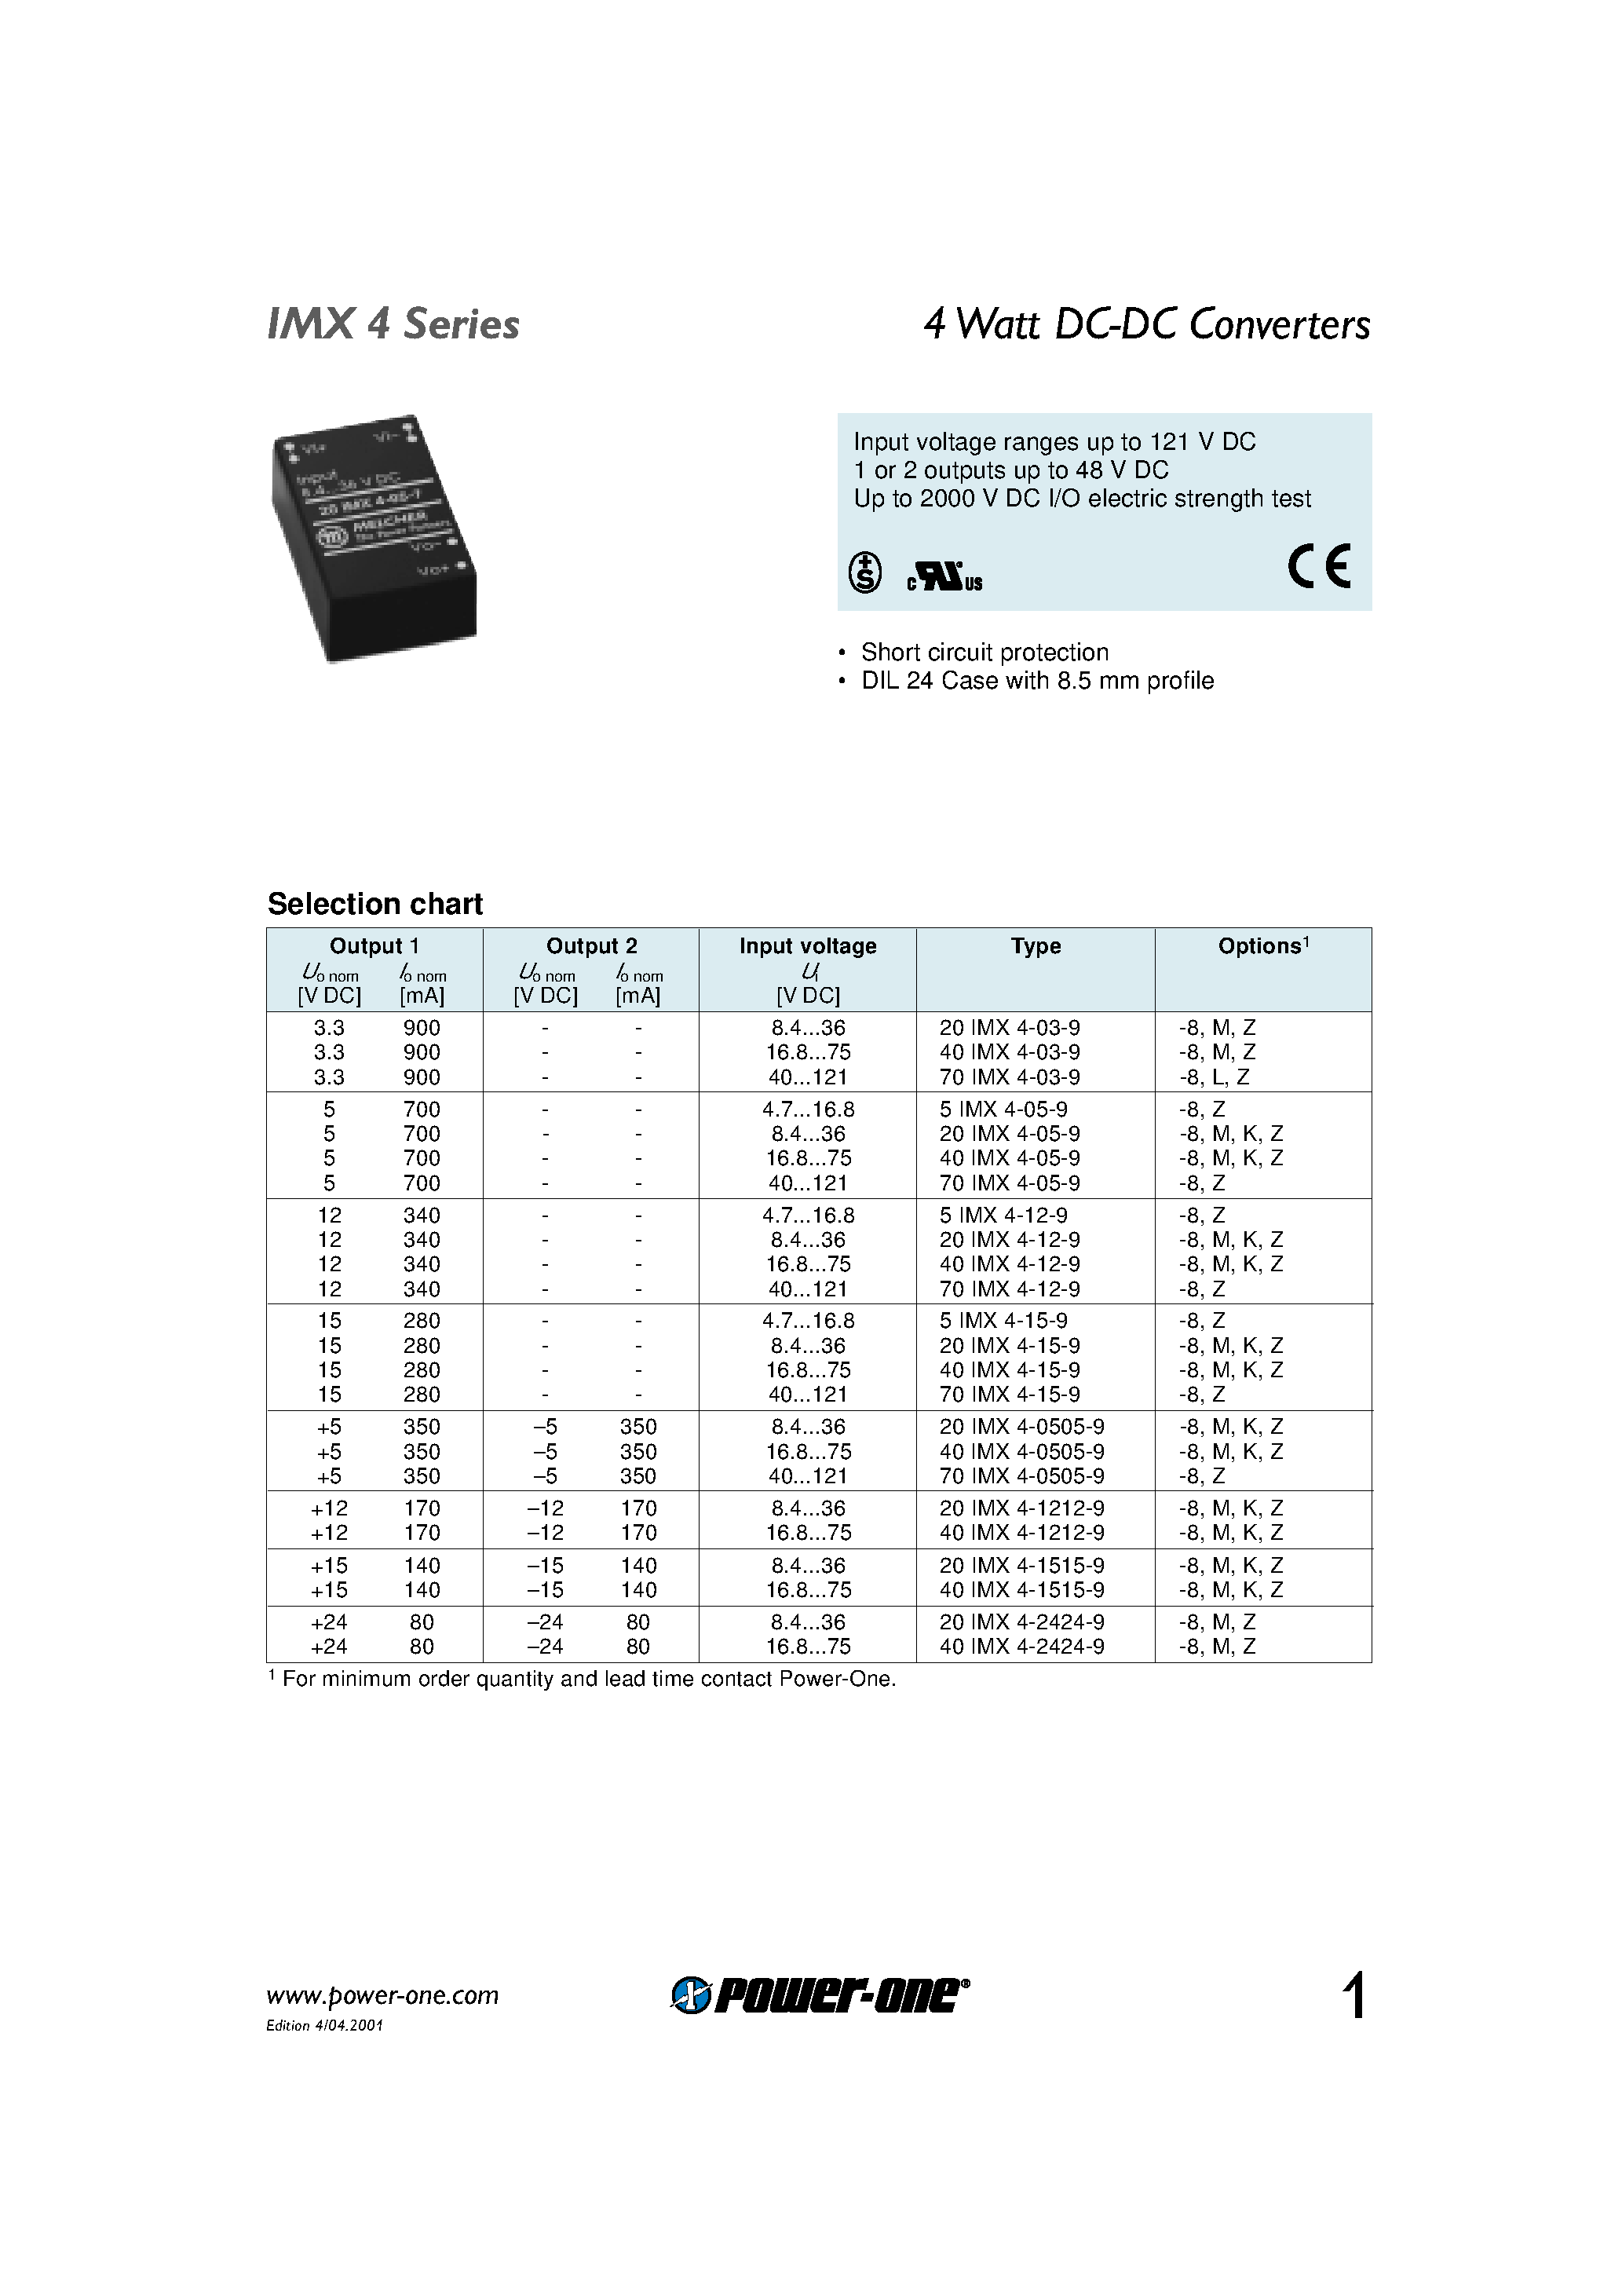 Даташит 40IMX4-1212-9 - 4 Watt DC-DC Converters страница 1